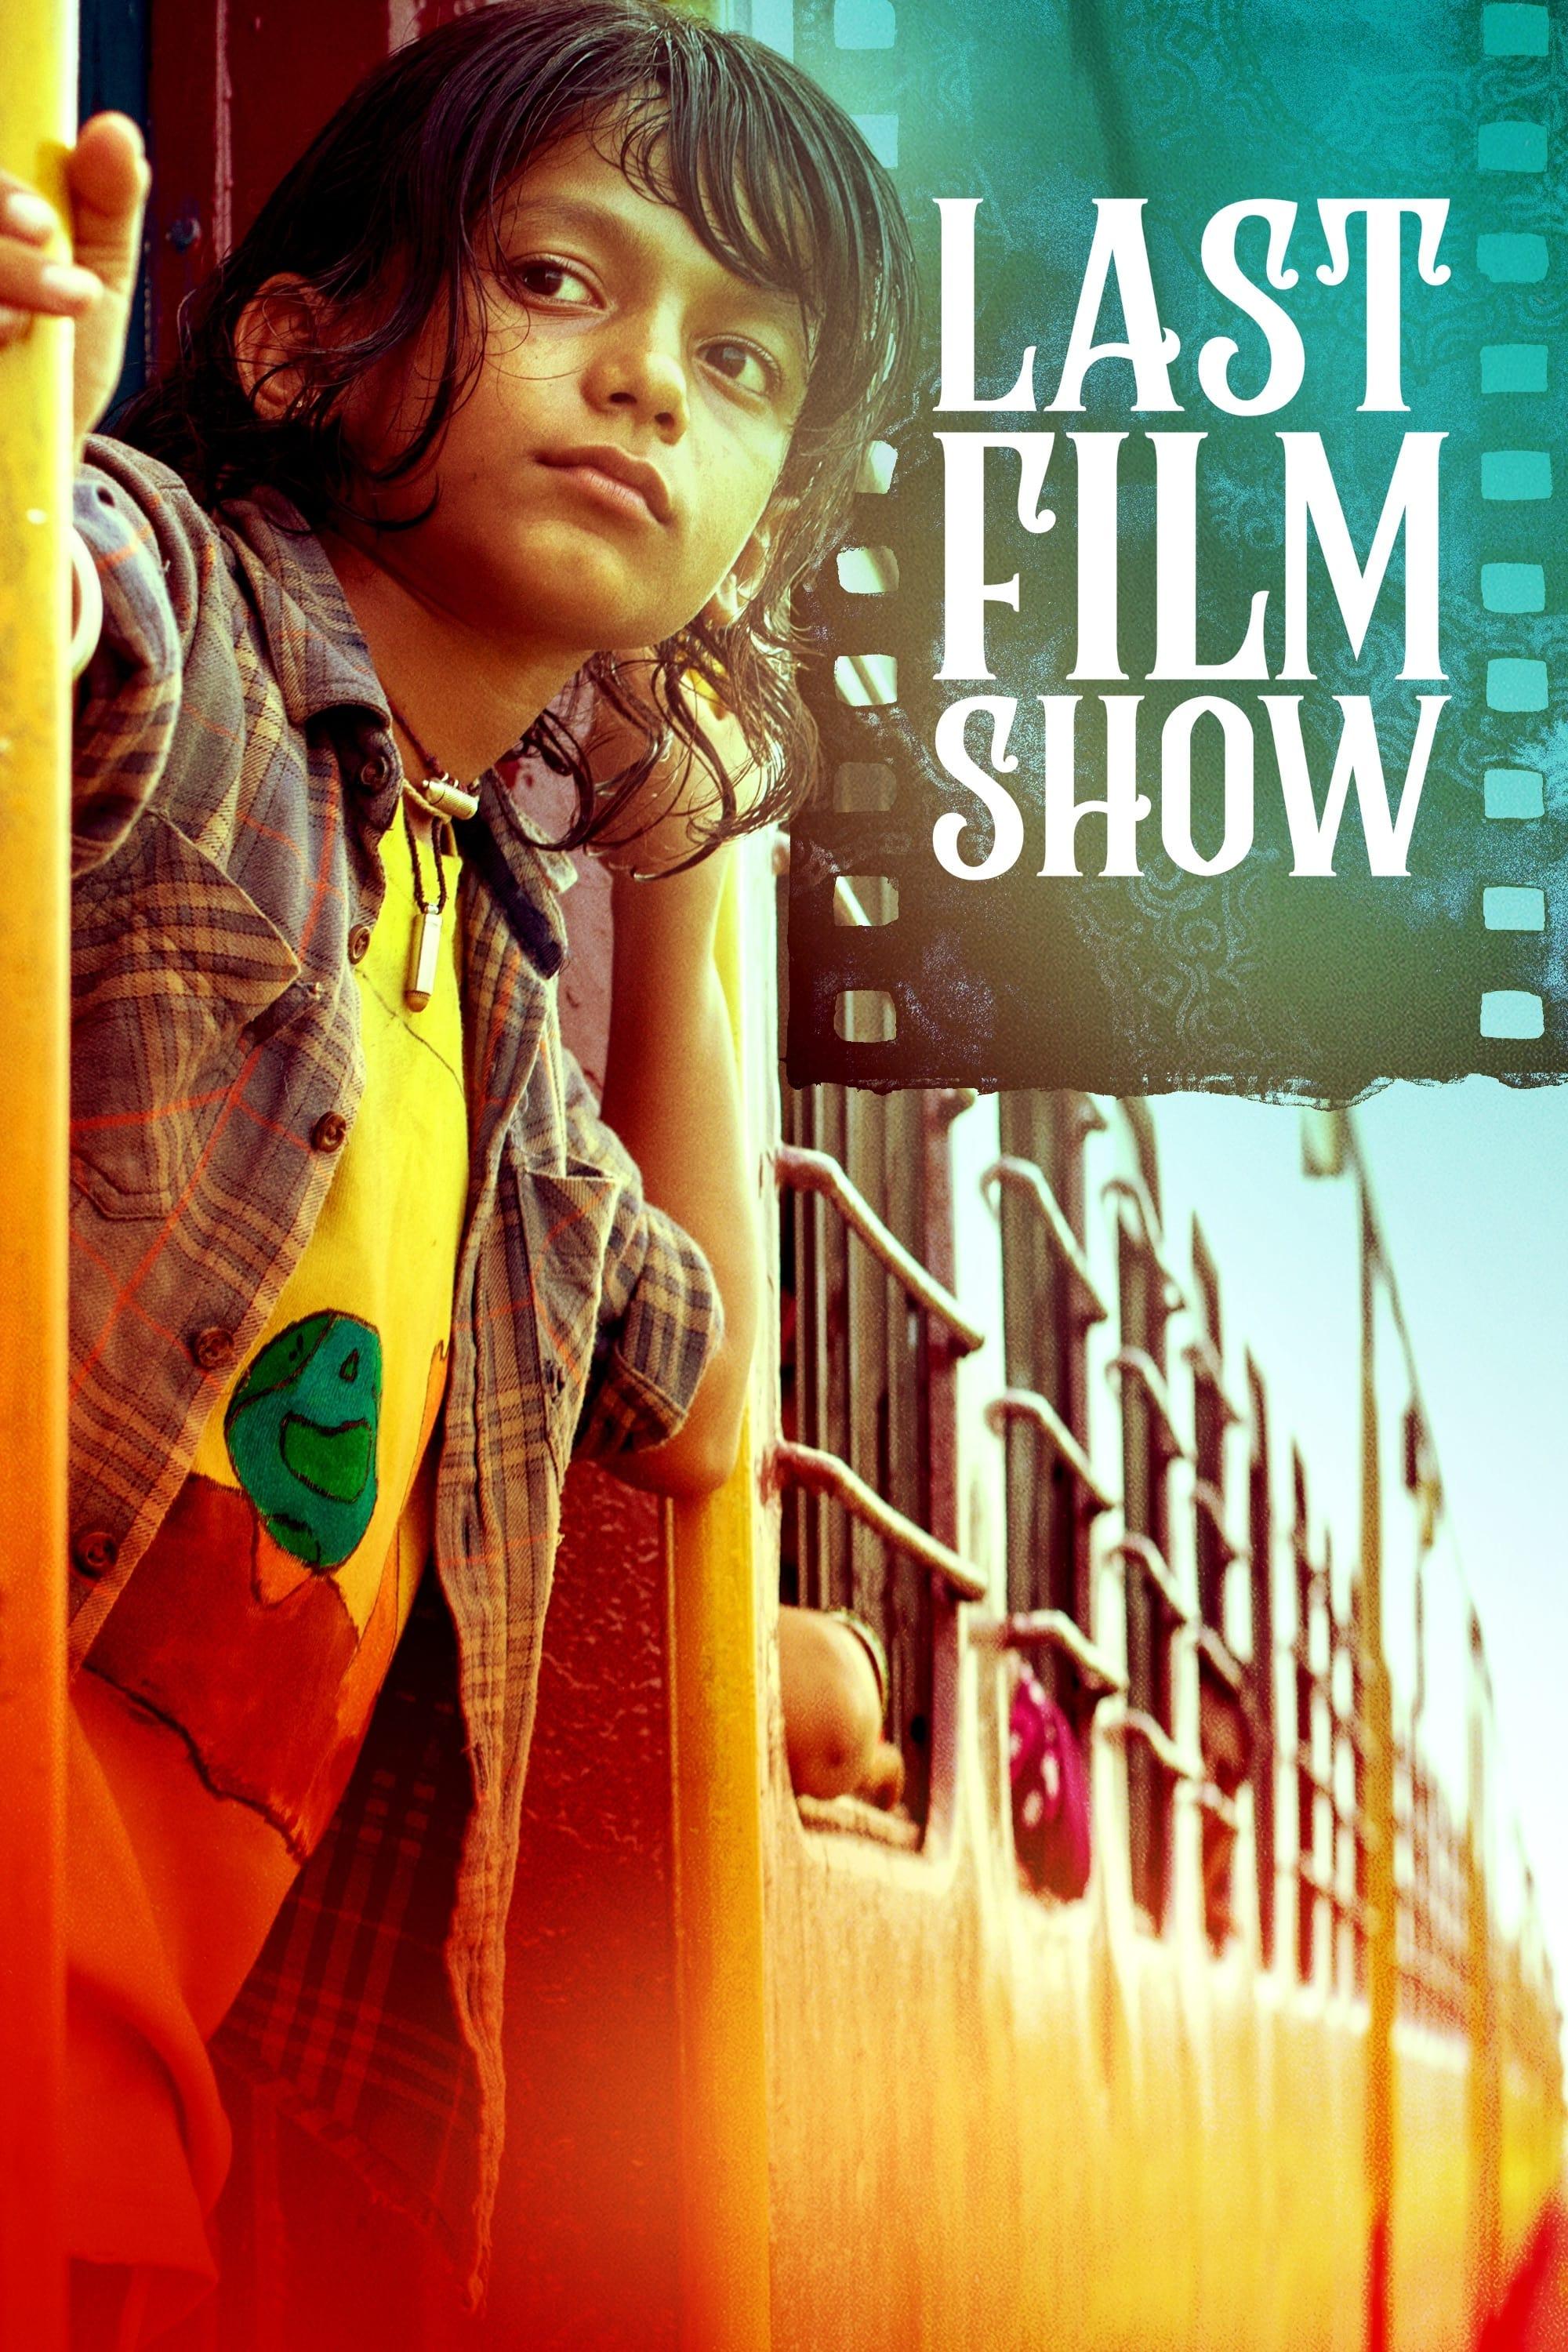 Last Film Show poster